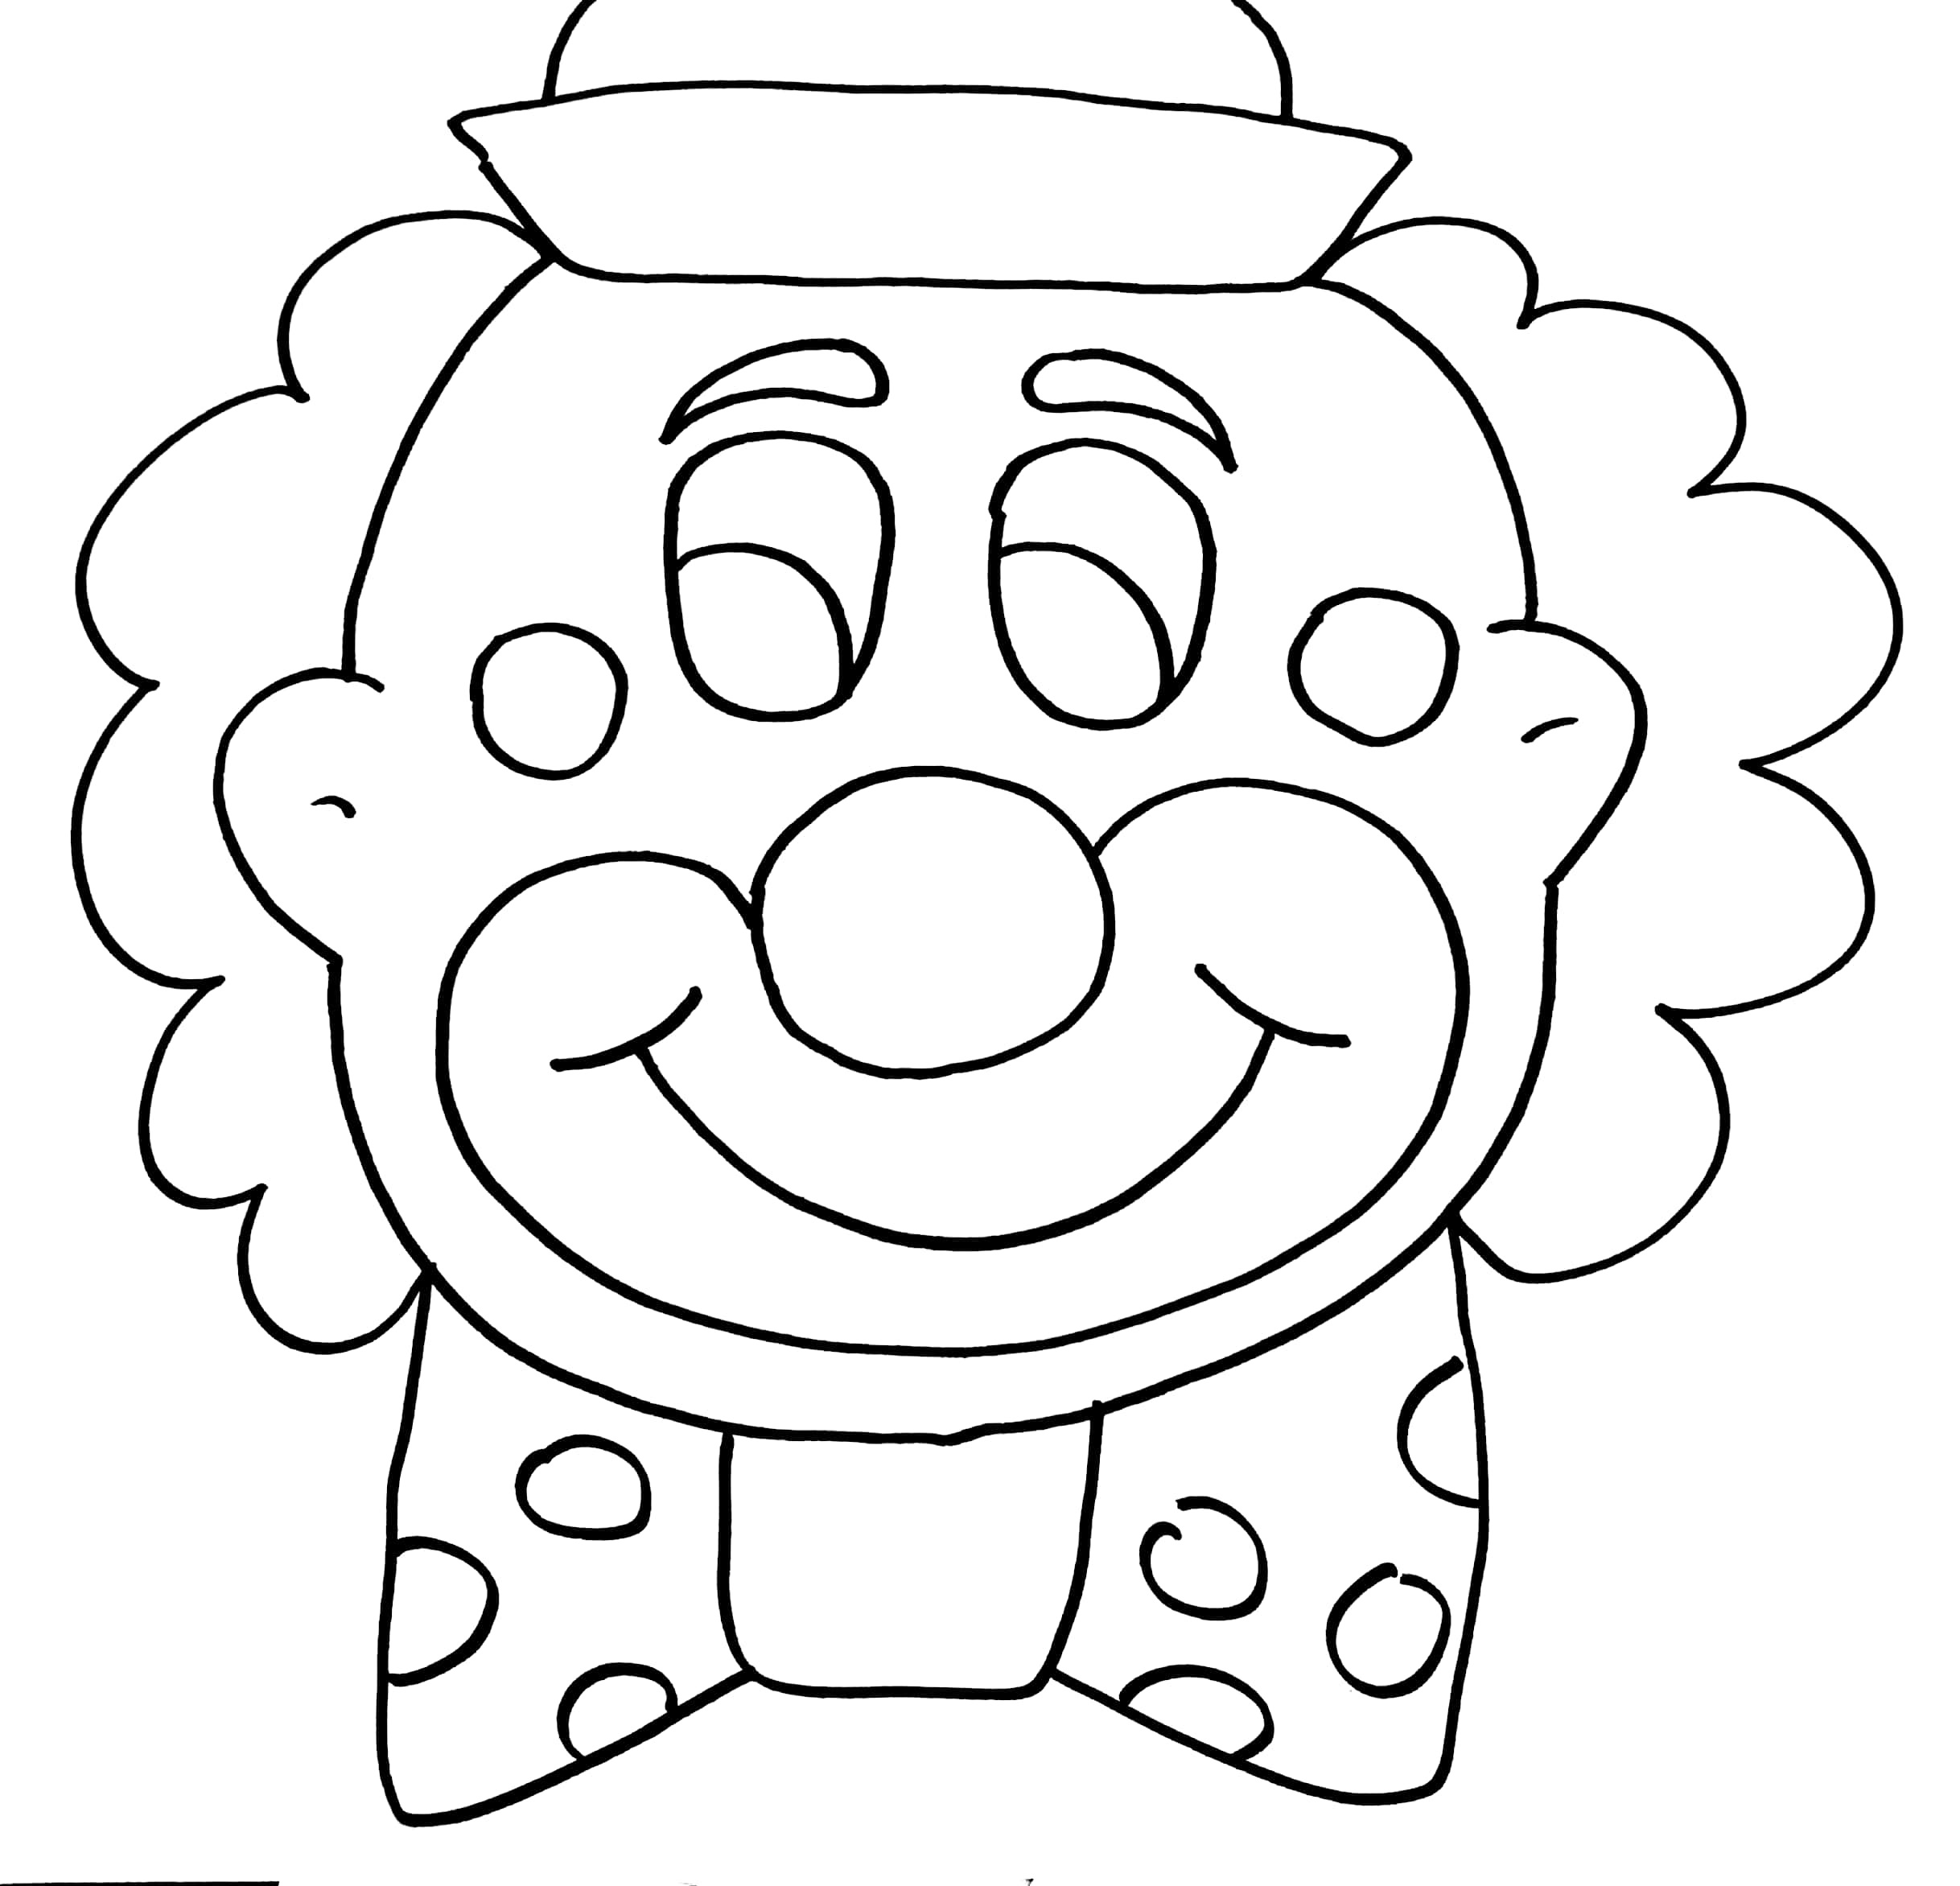 Шаблон клоуна для аппликации для детей. Клоун раскраска. Клоун раскраска для детей. Лицо клоуна раскраска. Лицо клоуна раскраски для детей.